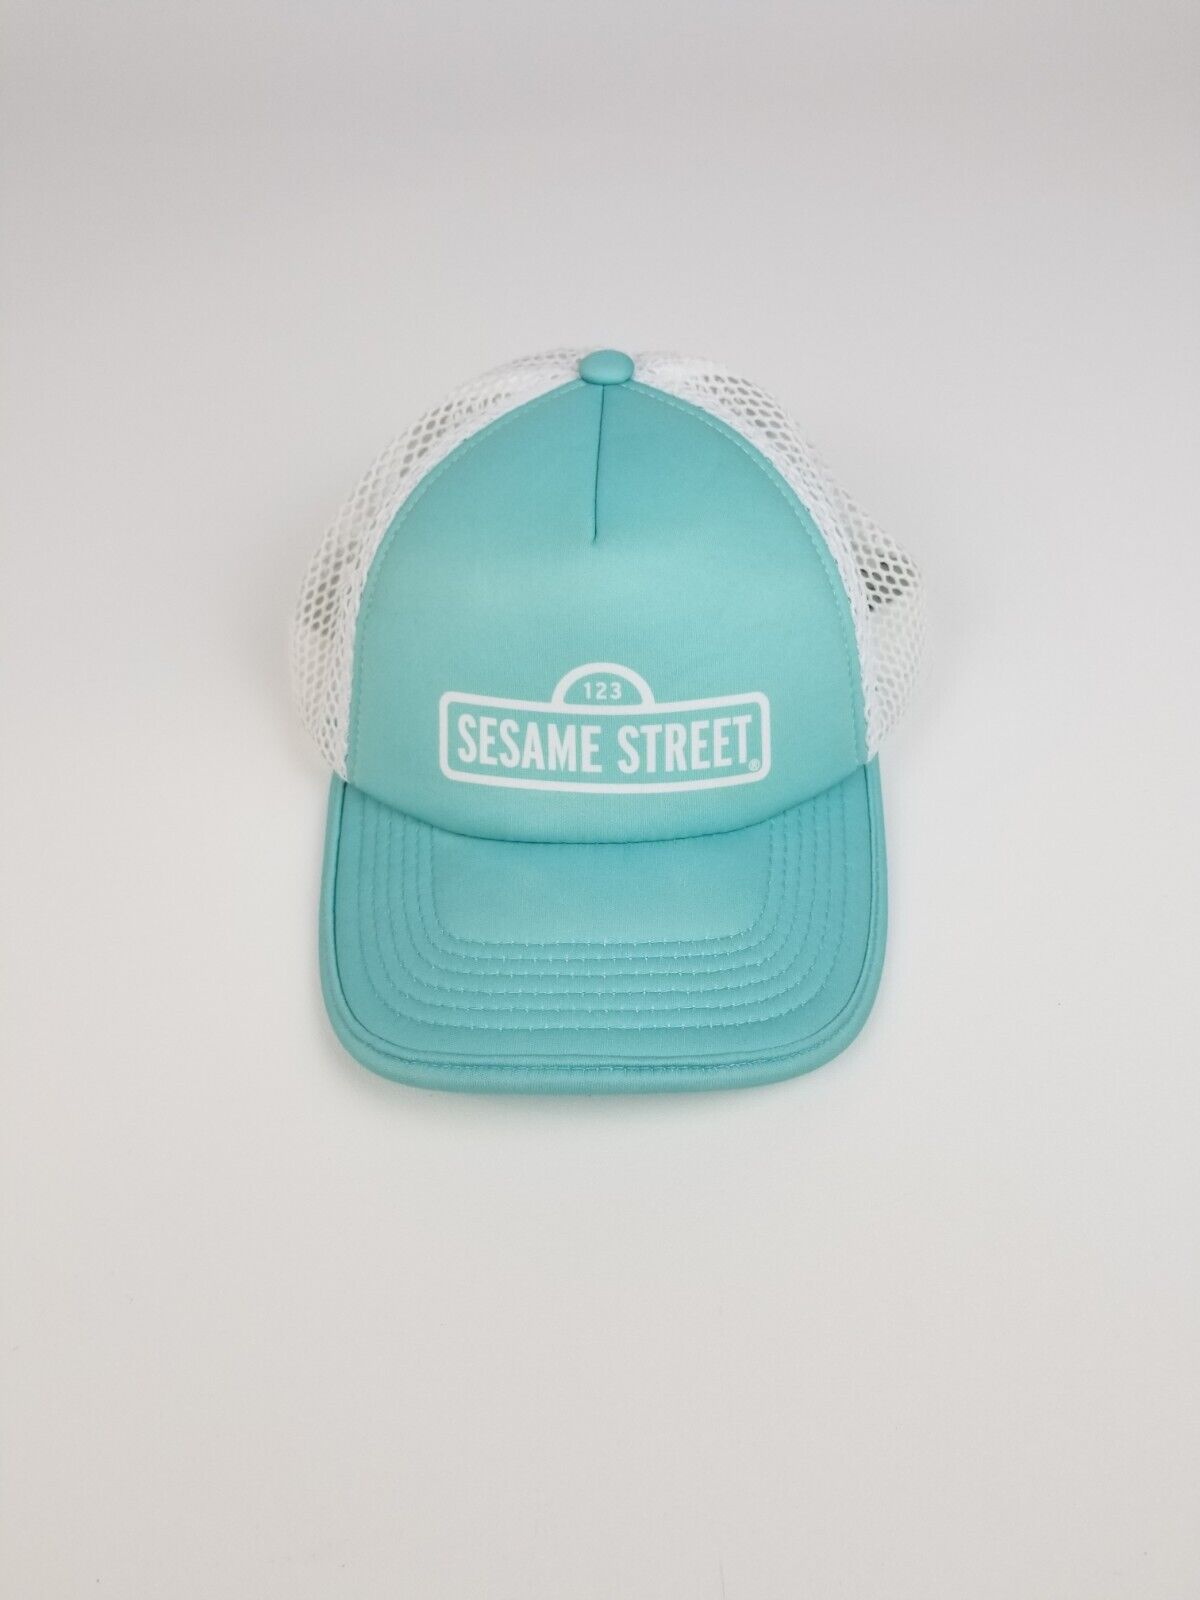 Sesame Street Genuine Hat Cap Size Youth/ Junior